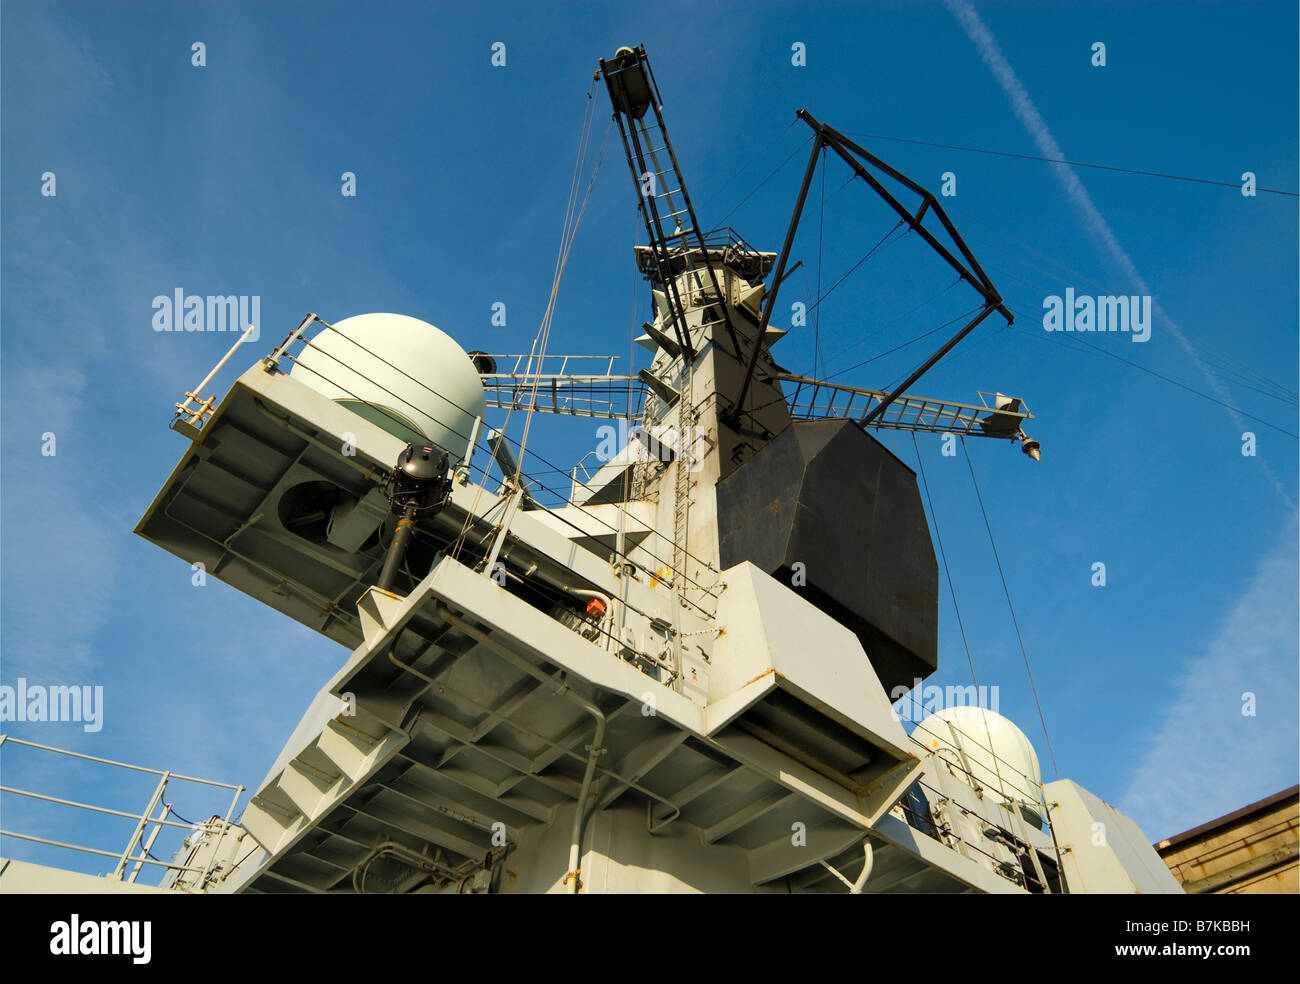 Aerials and radar dome on Royal Navy Ship Stock Photo